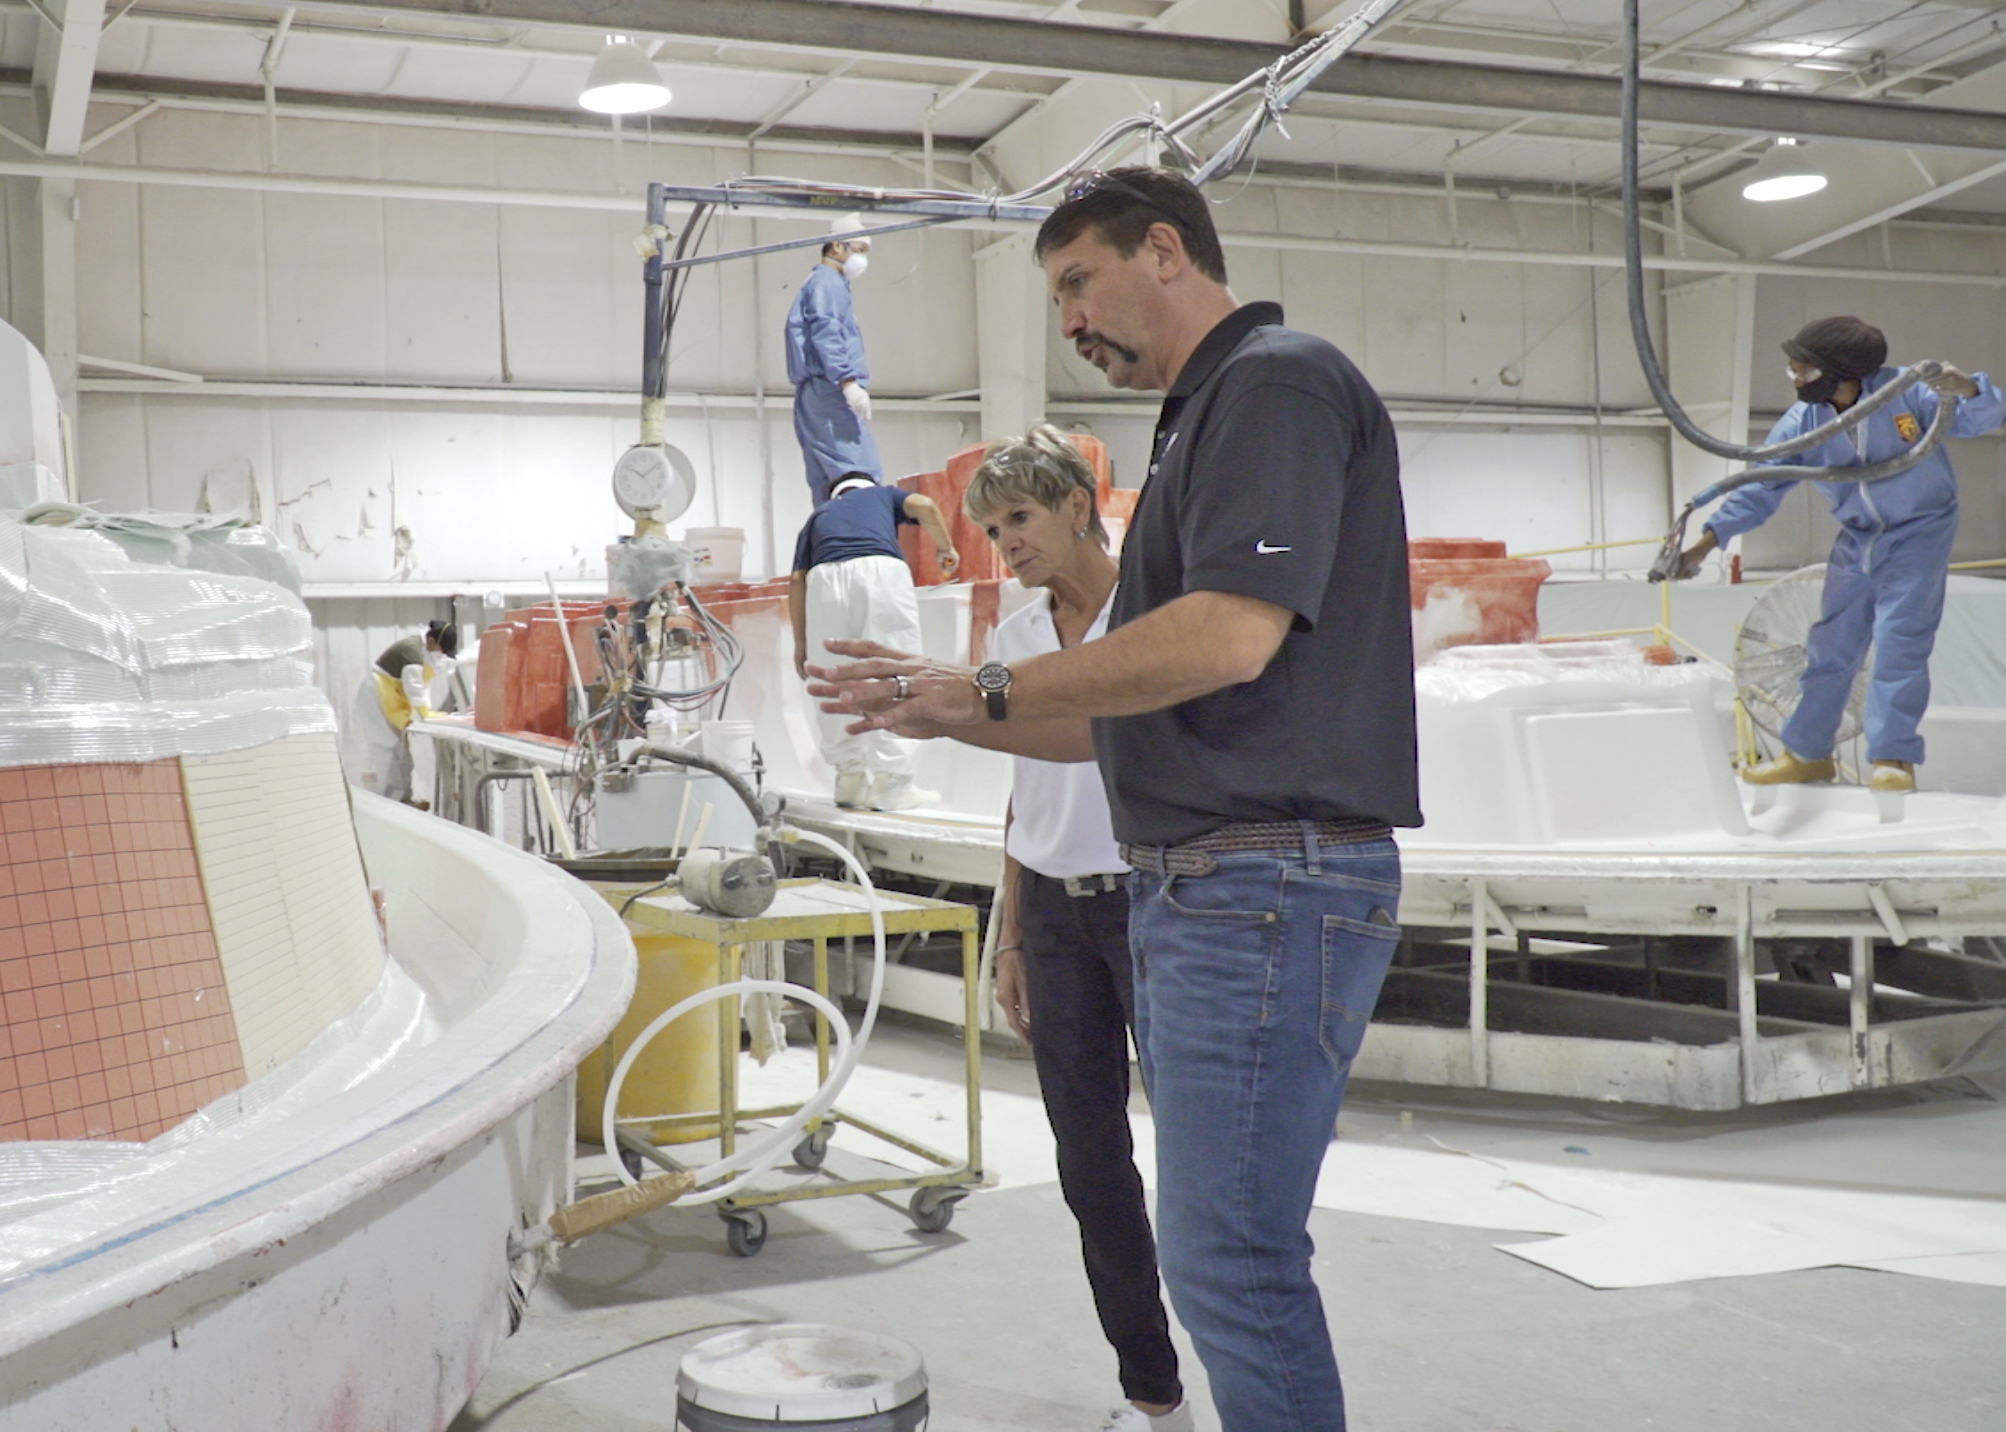 Ken Clinton at Intrepid Powerboats explains their fiberglass boat building process.